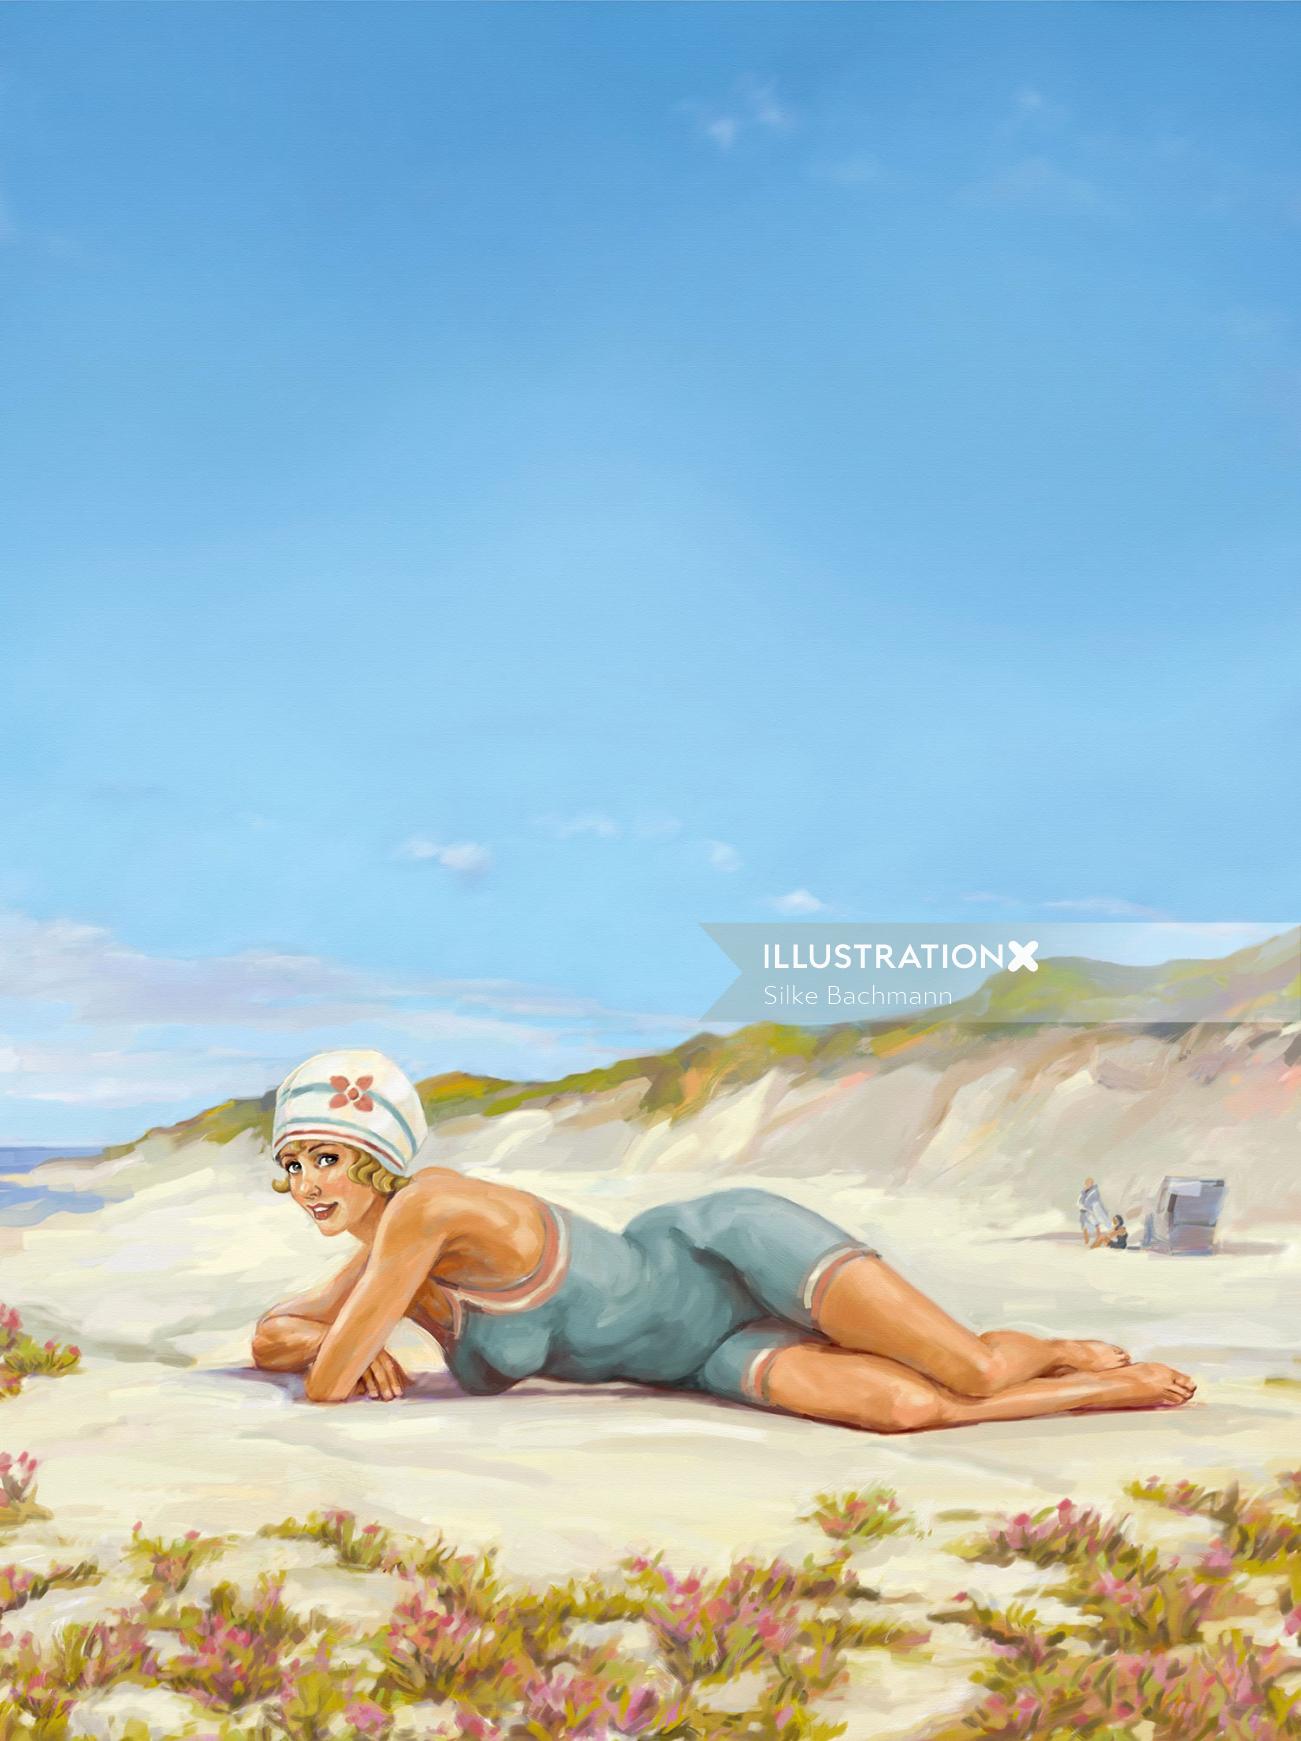 Swim suit woman sleeping at beach - An illustration by Silke Bachmann